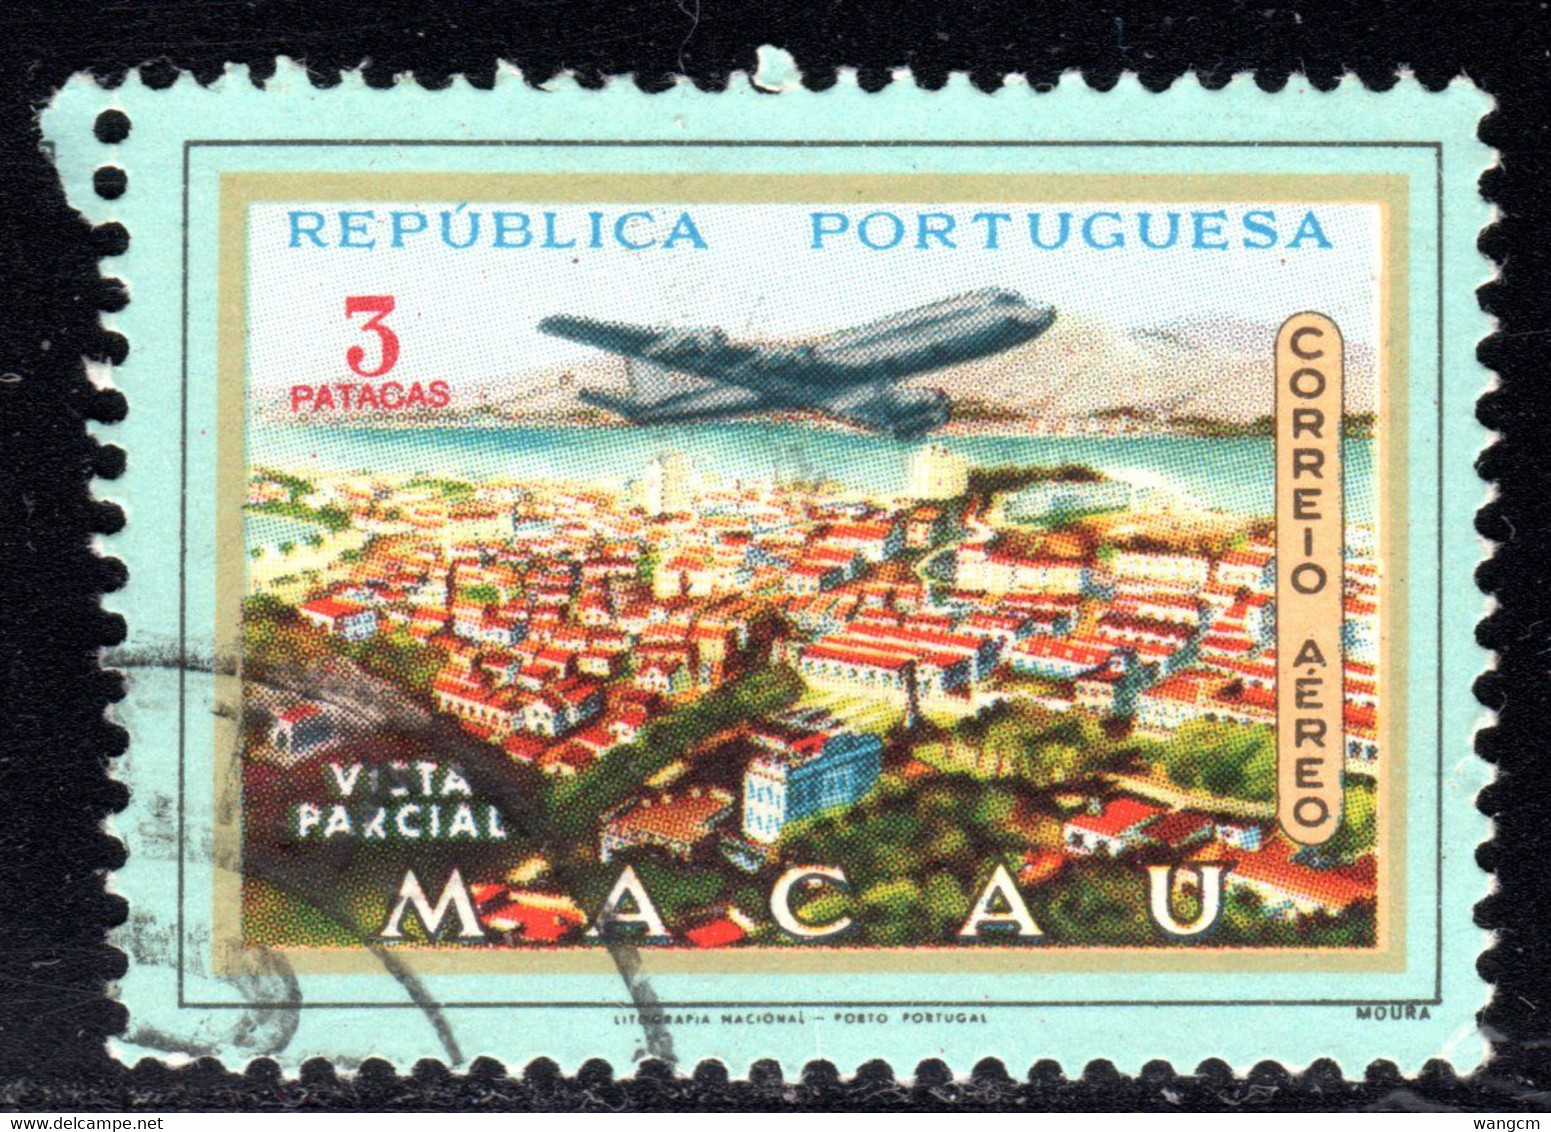 Macau 1960 3p Air Issue SG483 Scott#C18 Fine Used - Usados